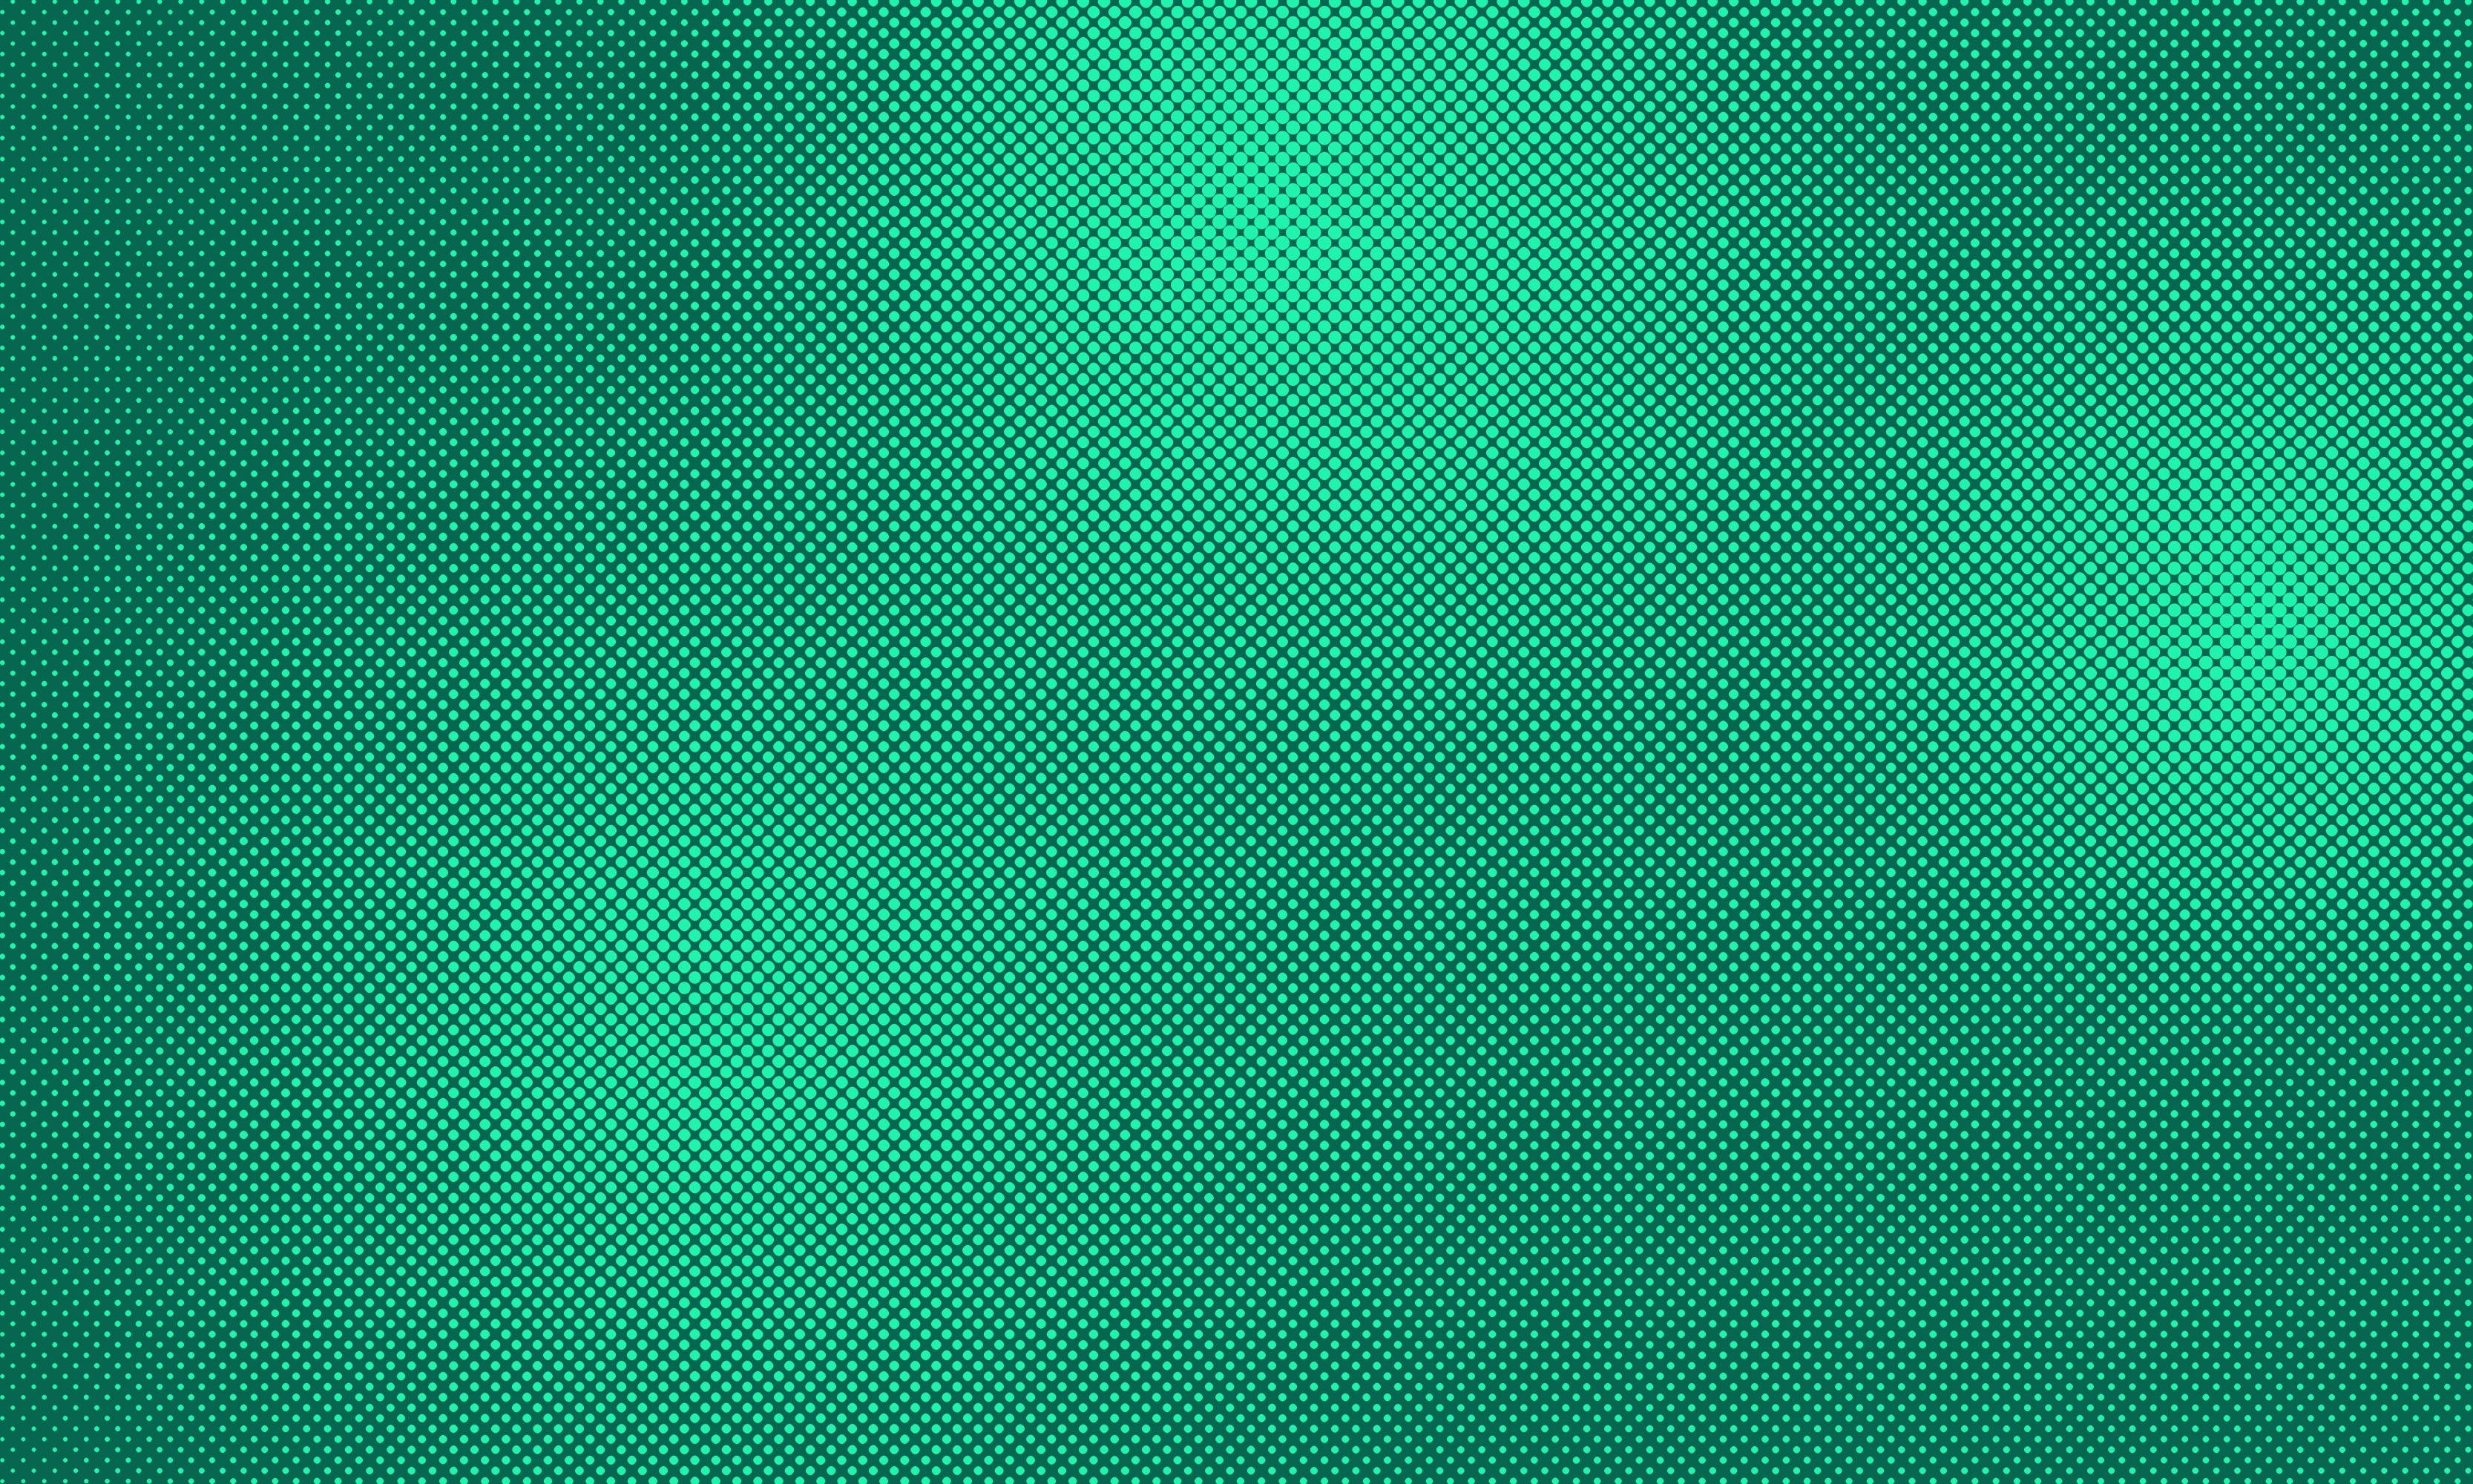 Light Green Pixel Pattern Background